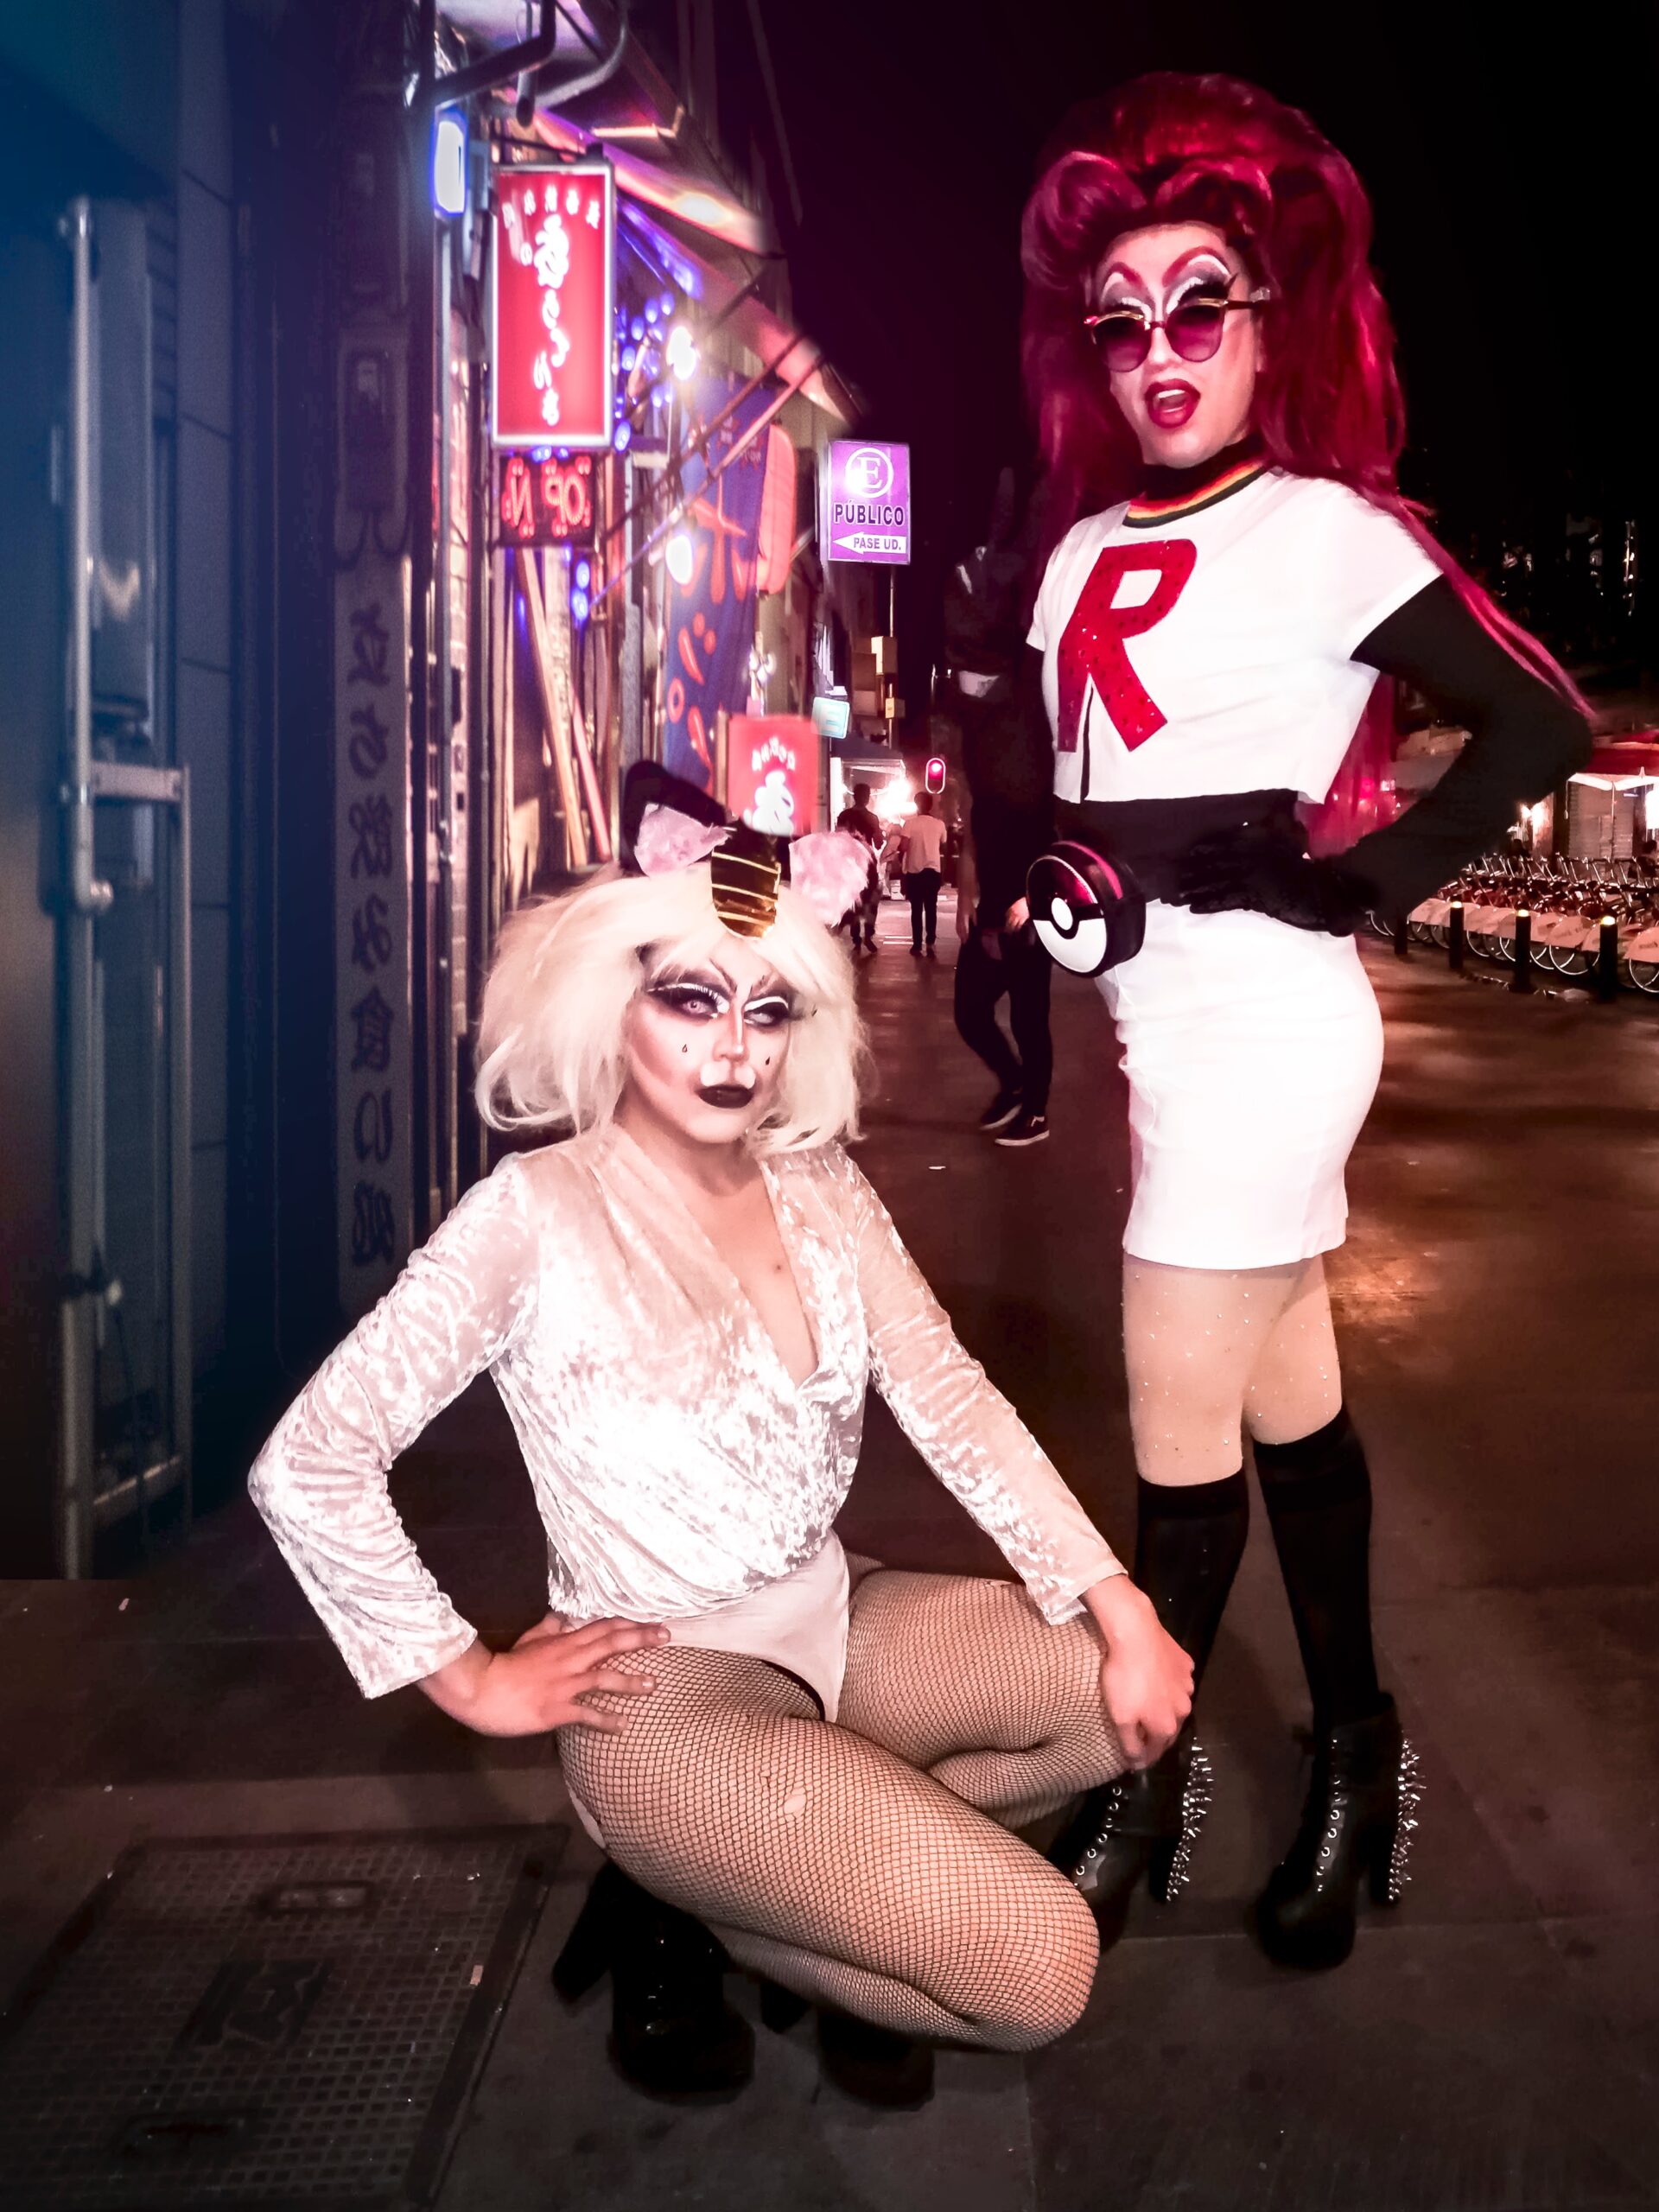 Zwei queeres Menschen in Drag Halloween Kostümen